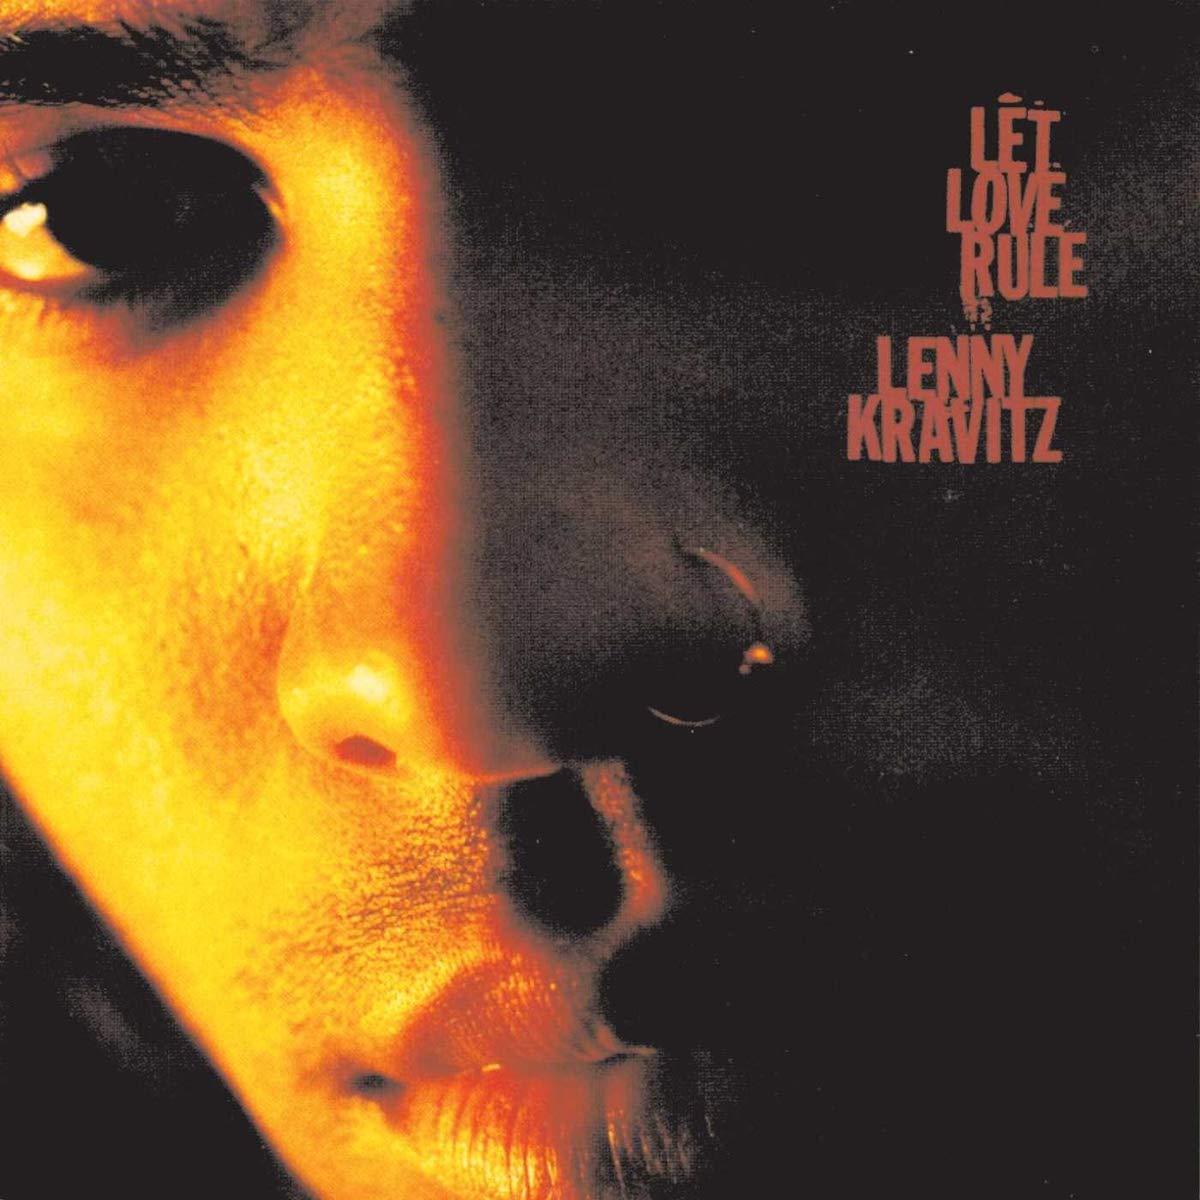 LENNY KRAVITZ - LET LOVE RULE Vinyl 2xLP